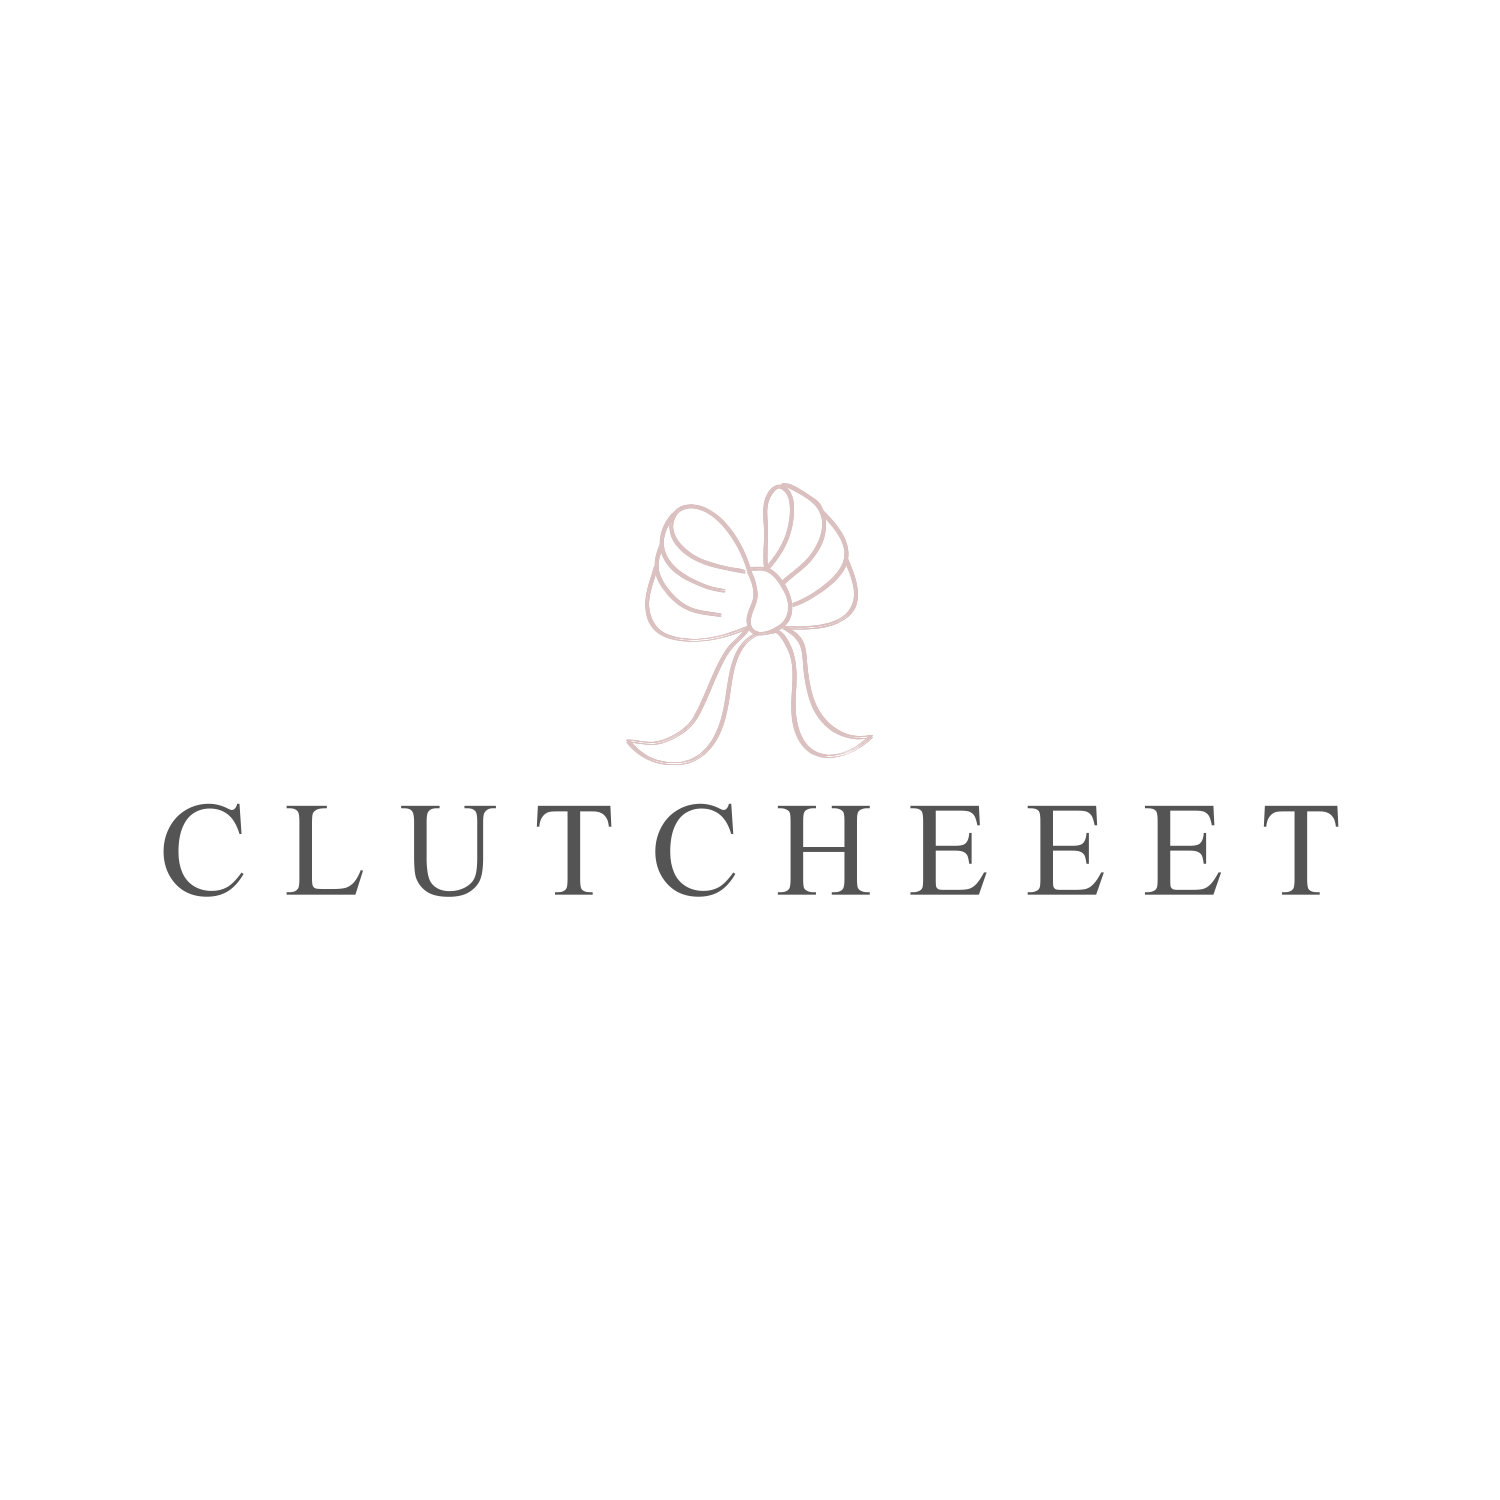 Clutcheeet